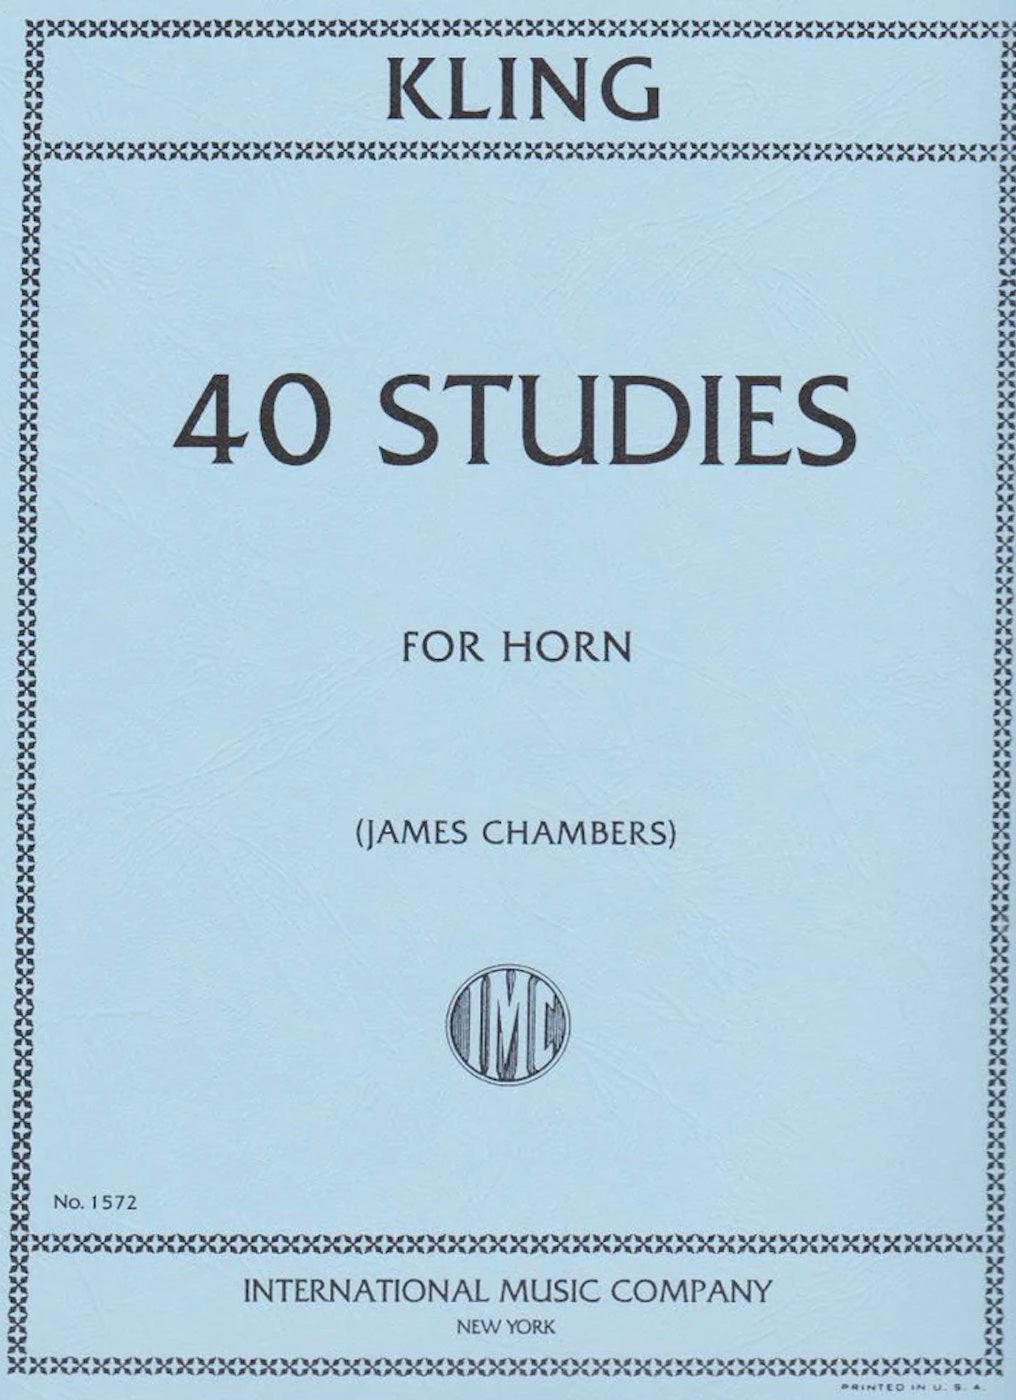 40 Studies - Henri Adrien Louis Kling - French Horn IMC French Horn Solo